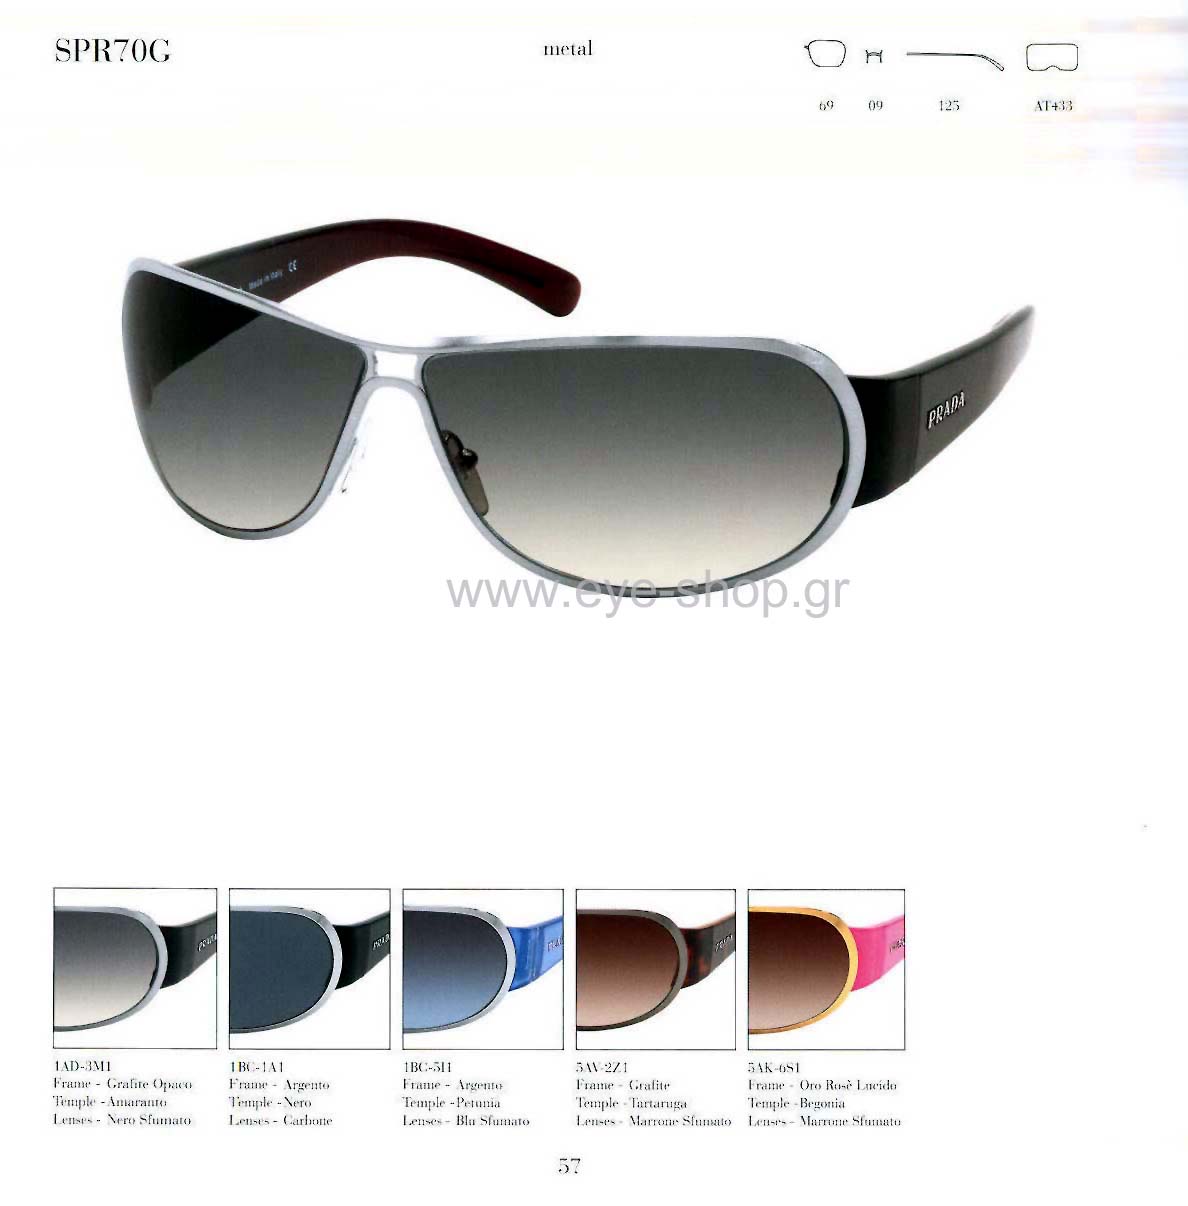 Sunglasses Prada 70GS 1AD3M1